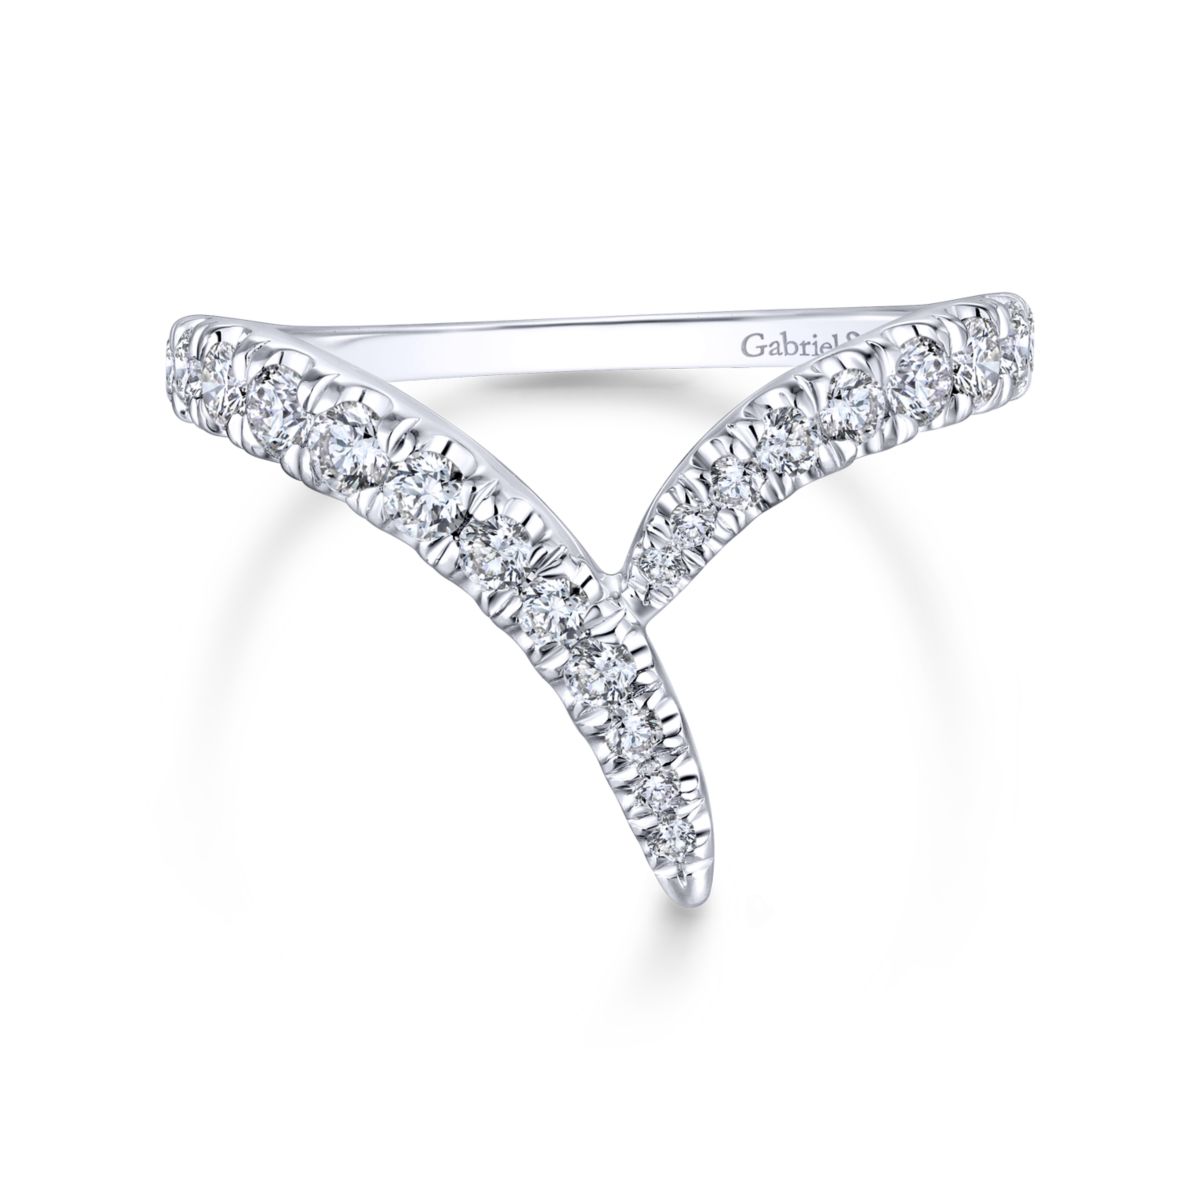 V-Shaped Diamond Ring in 14k White Gold-Gabriel-LR51302W45JJ-1